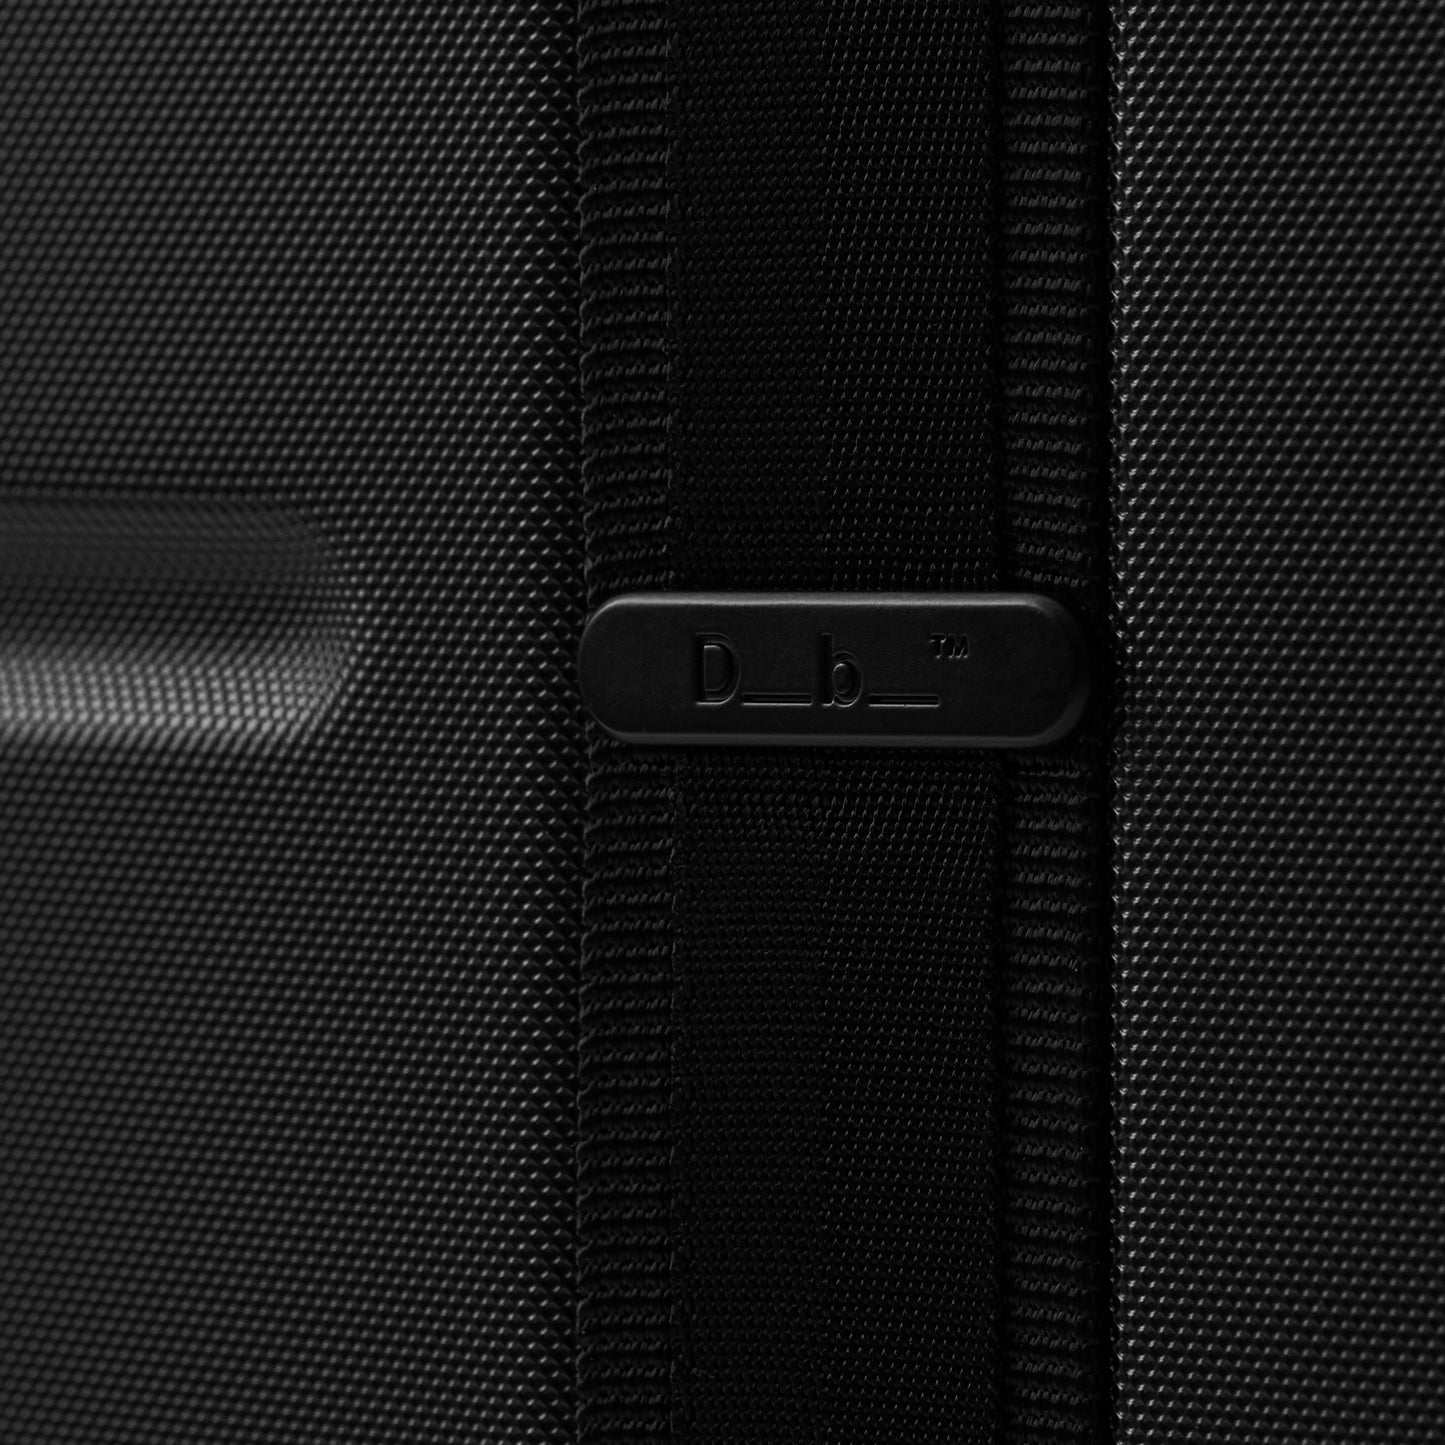 DB Journey Ramverk Pro Check-in Luggage Medium Silver